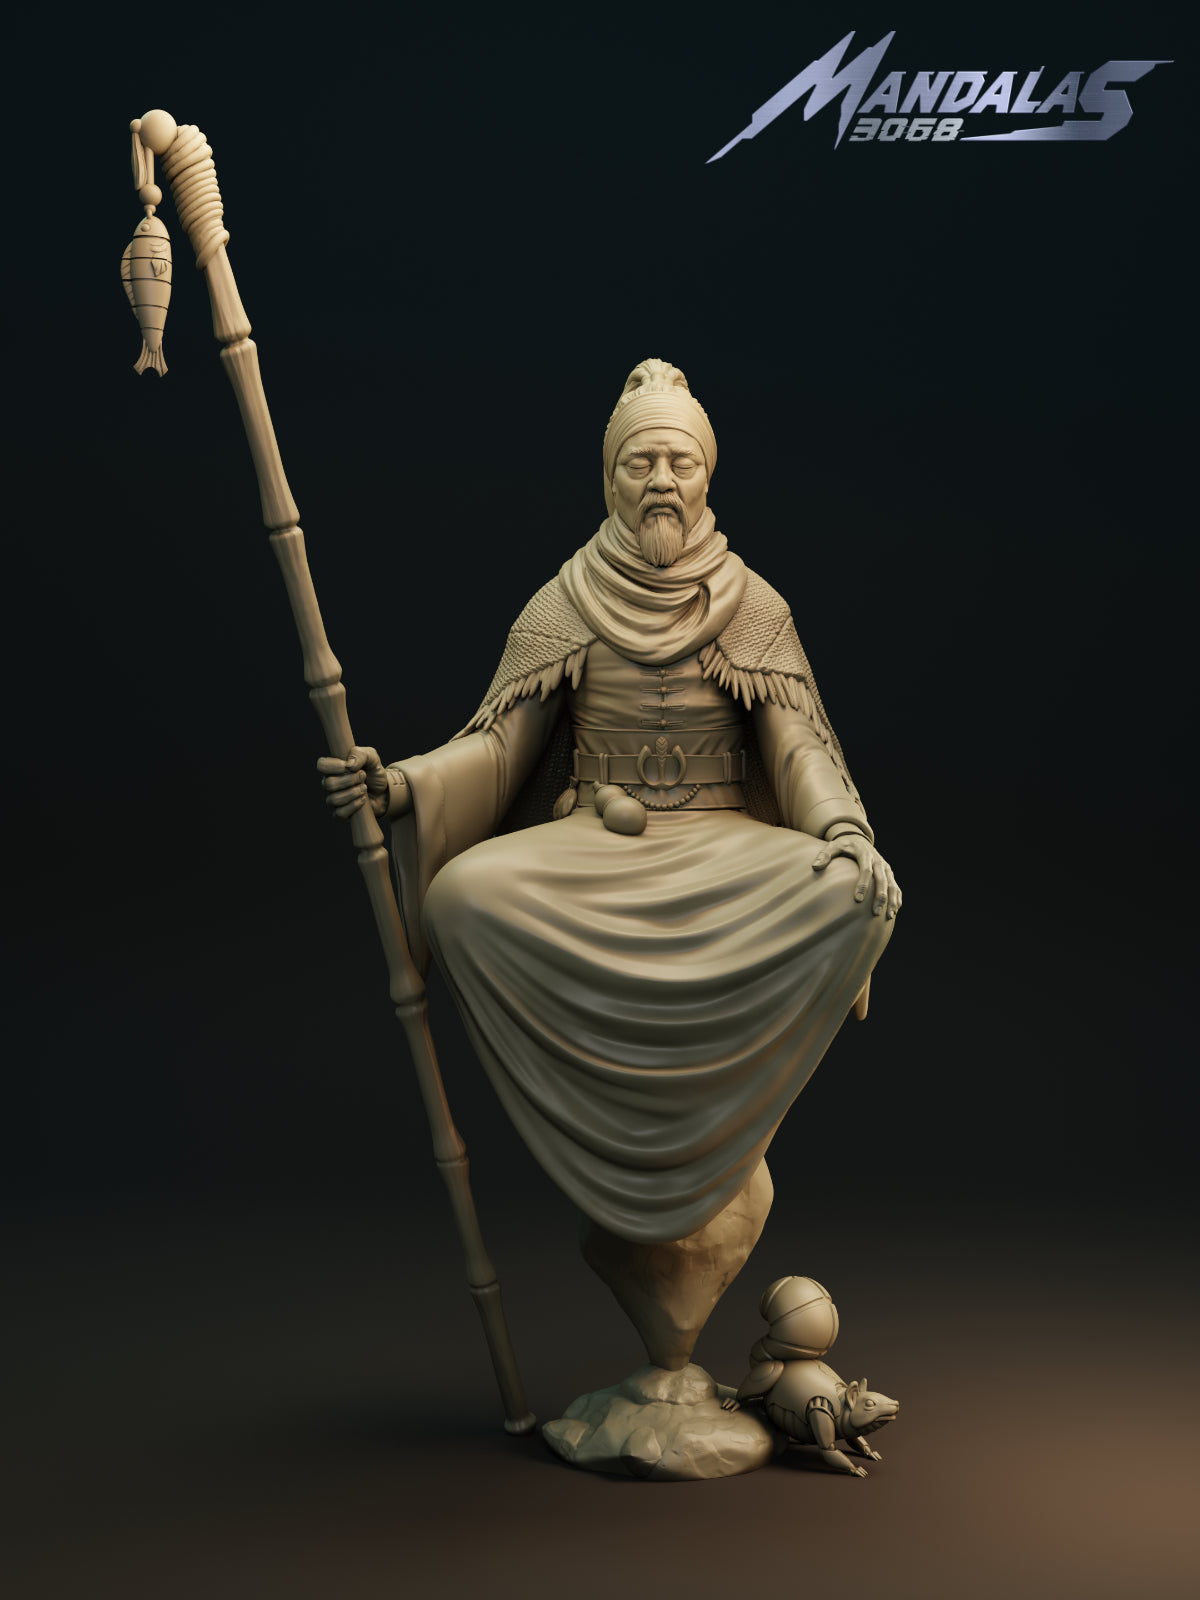 MANDALAS 3068 - Jiang Ziya, the Grandmaster of Zen